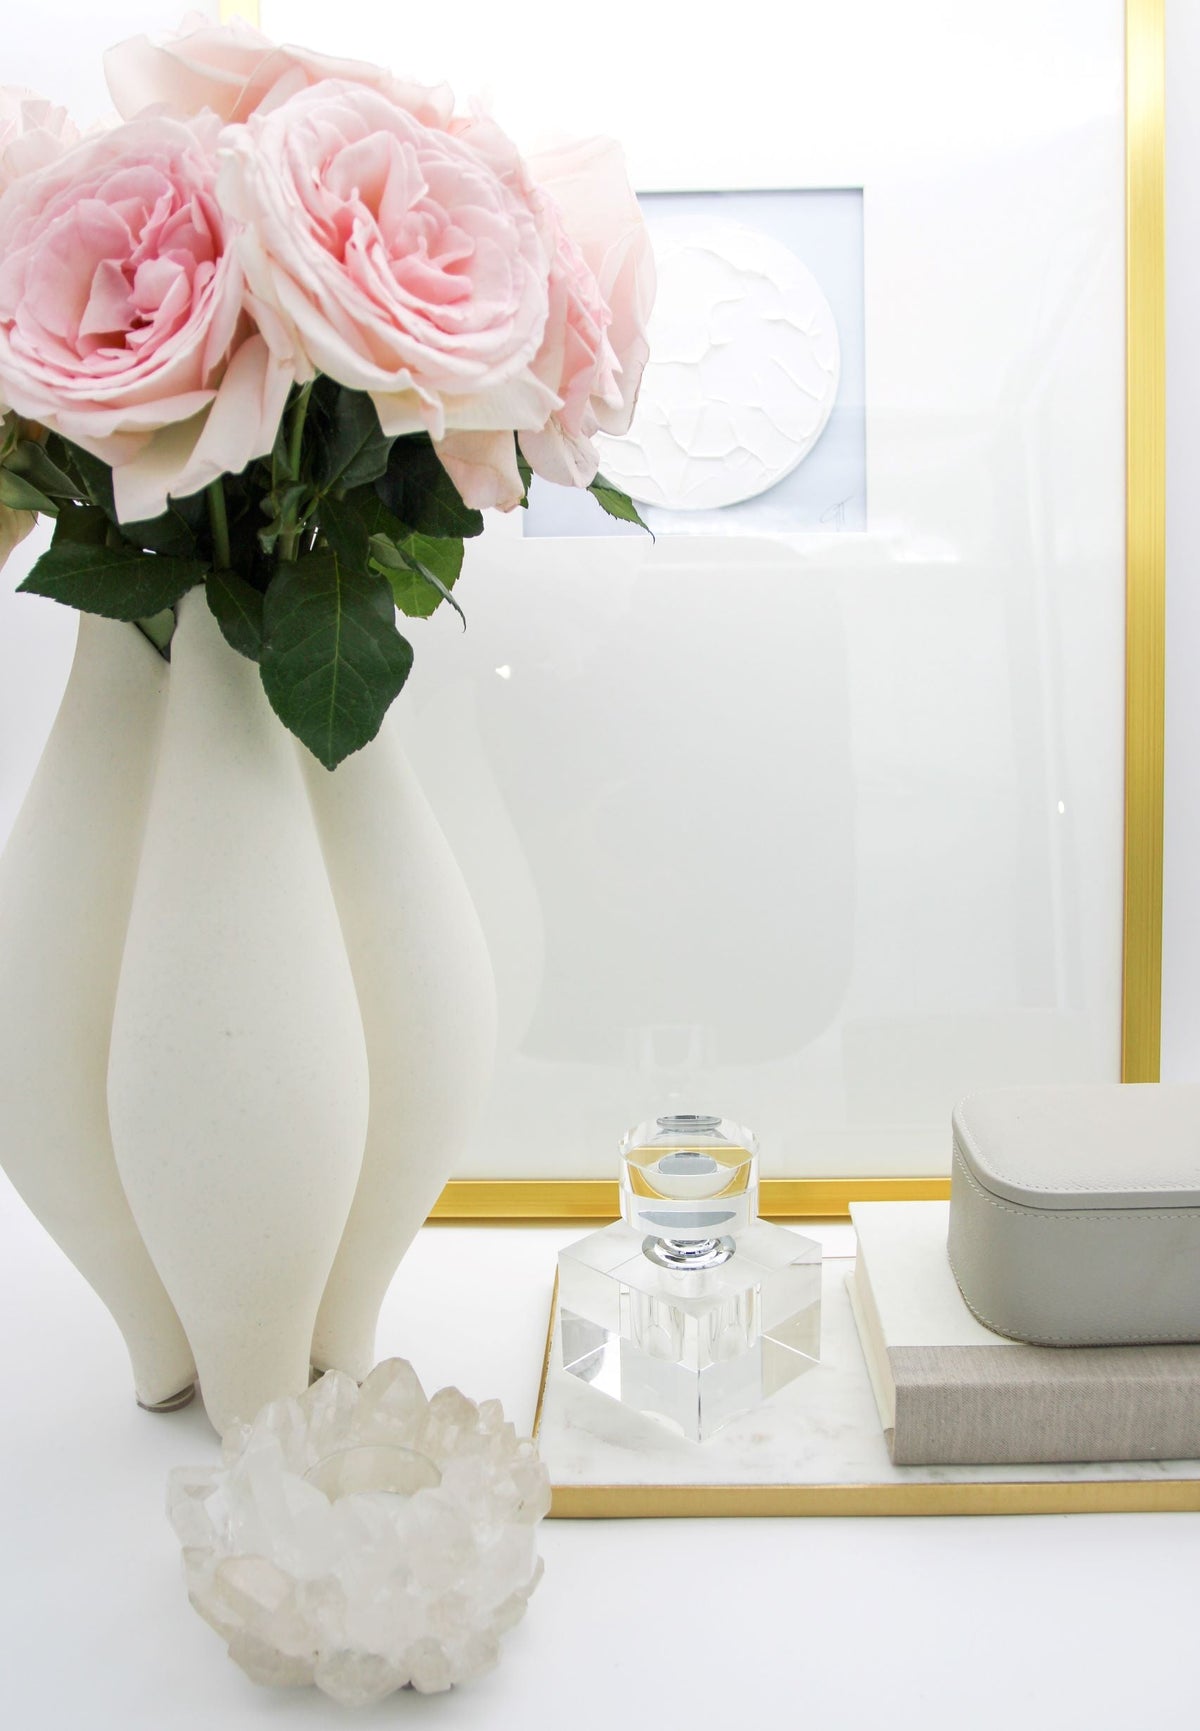 White floral Pond vase on table